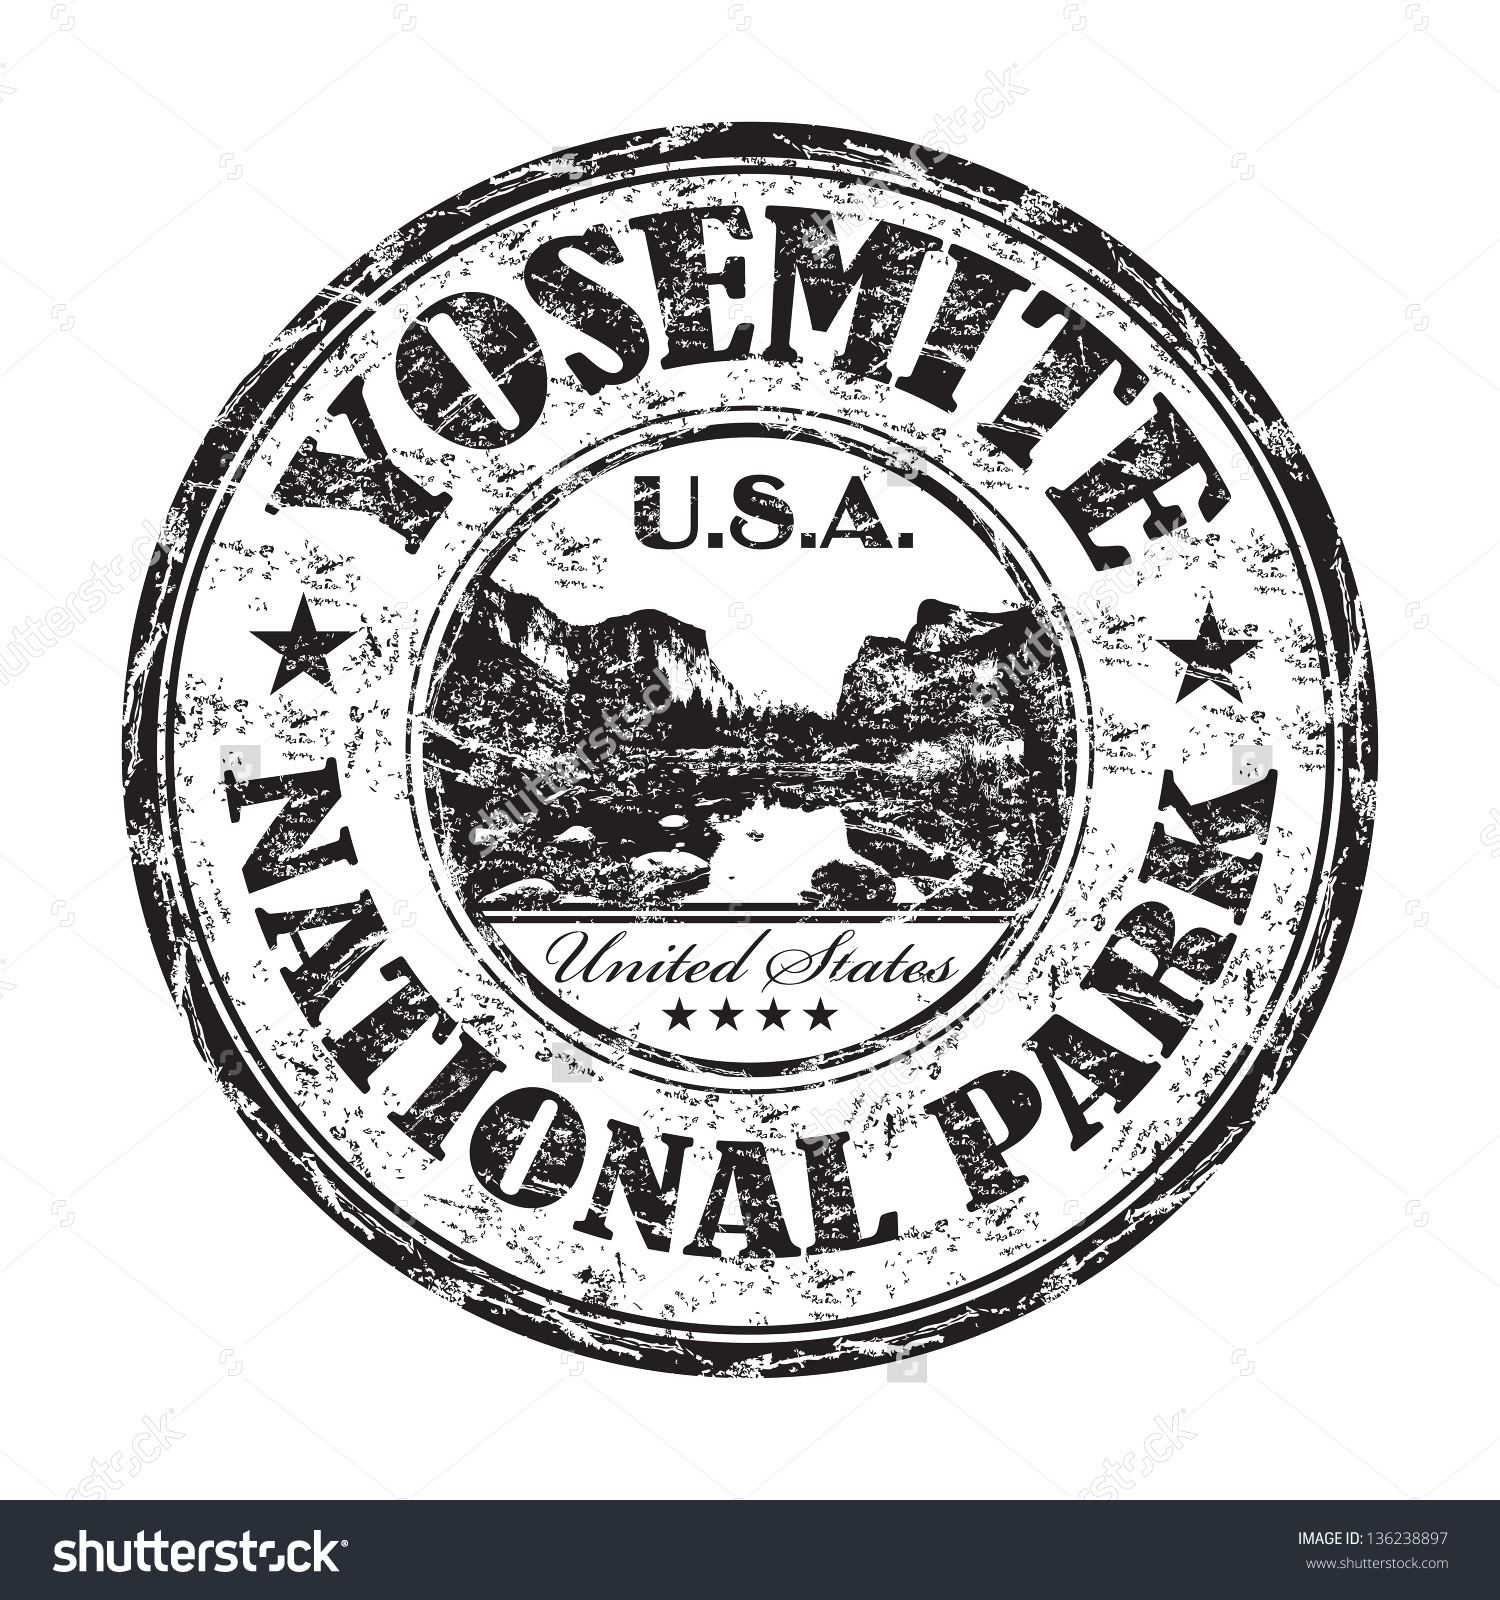 Black Grunge Rubber Stamp Name Yosemite Stock Vector 136238897.